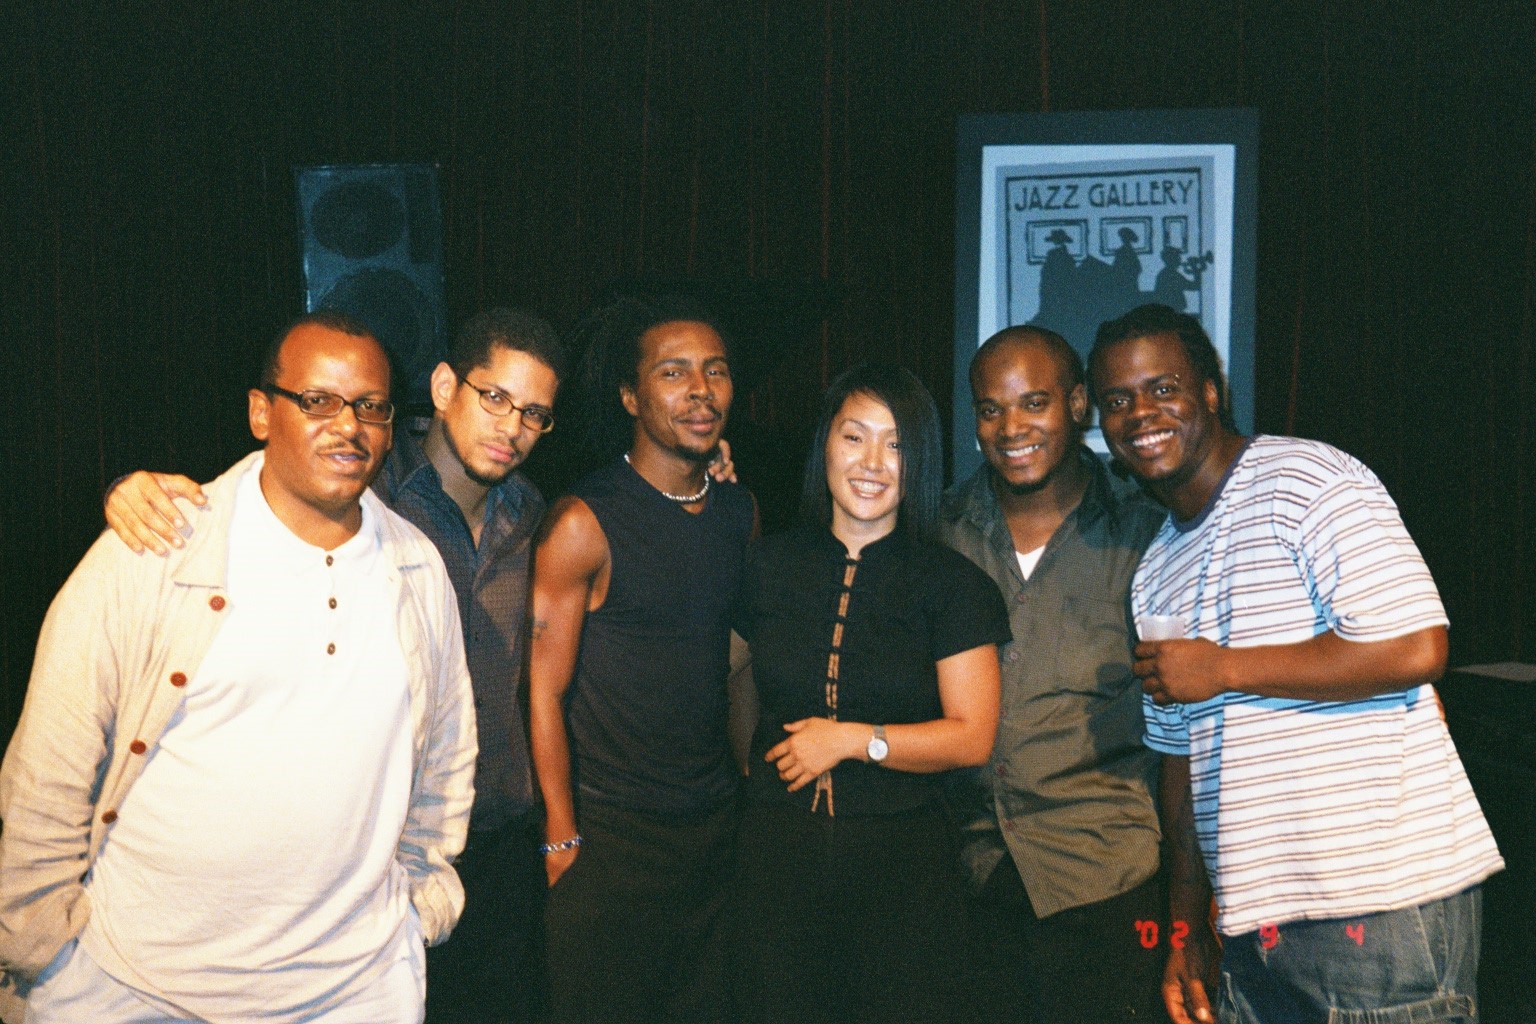 From left to right: Pianist Stephen Scott (piano), Cuban trumpeter Yasek Manzano, Roy Hargove, Rio Sakairi, bassist Tarus Mateen, and drummer Greg Hutchinson